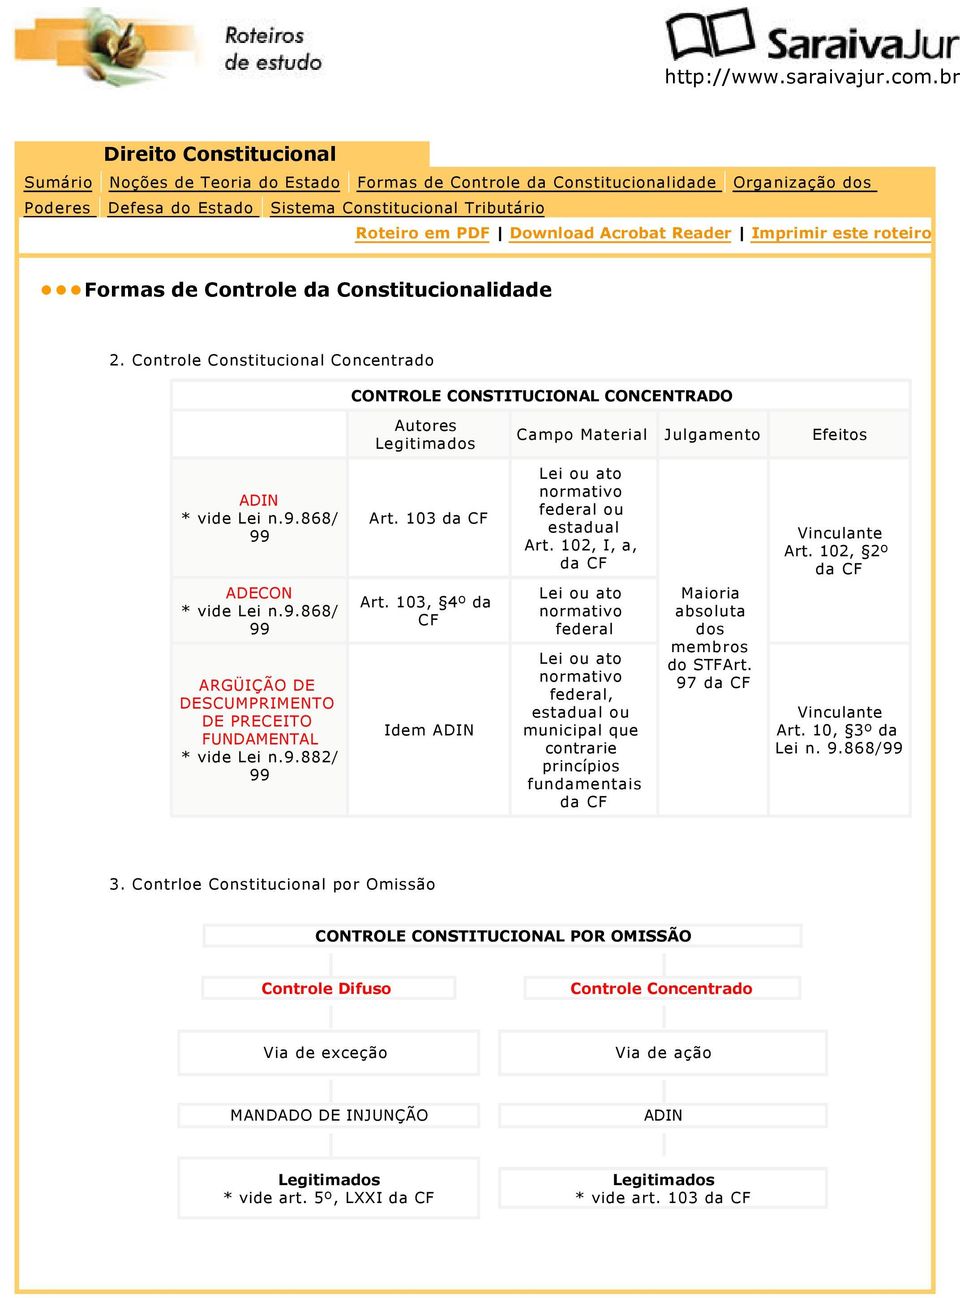 Controle Constitucional Concentrado CONTROLE CONSTITUCIONAL CONCENTRADO Autores Legitimados Campo Material Julgamento Efeitos ADIN * vide Lei n.9.